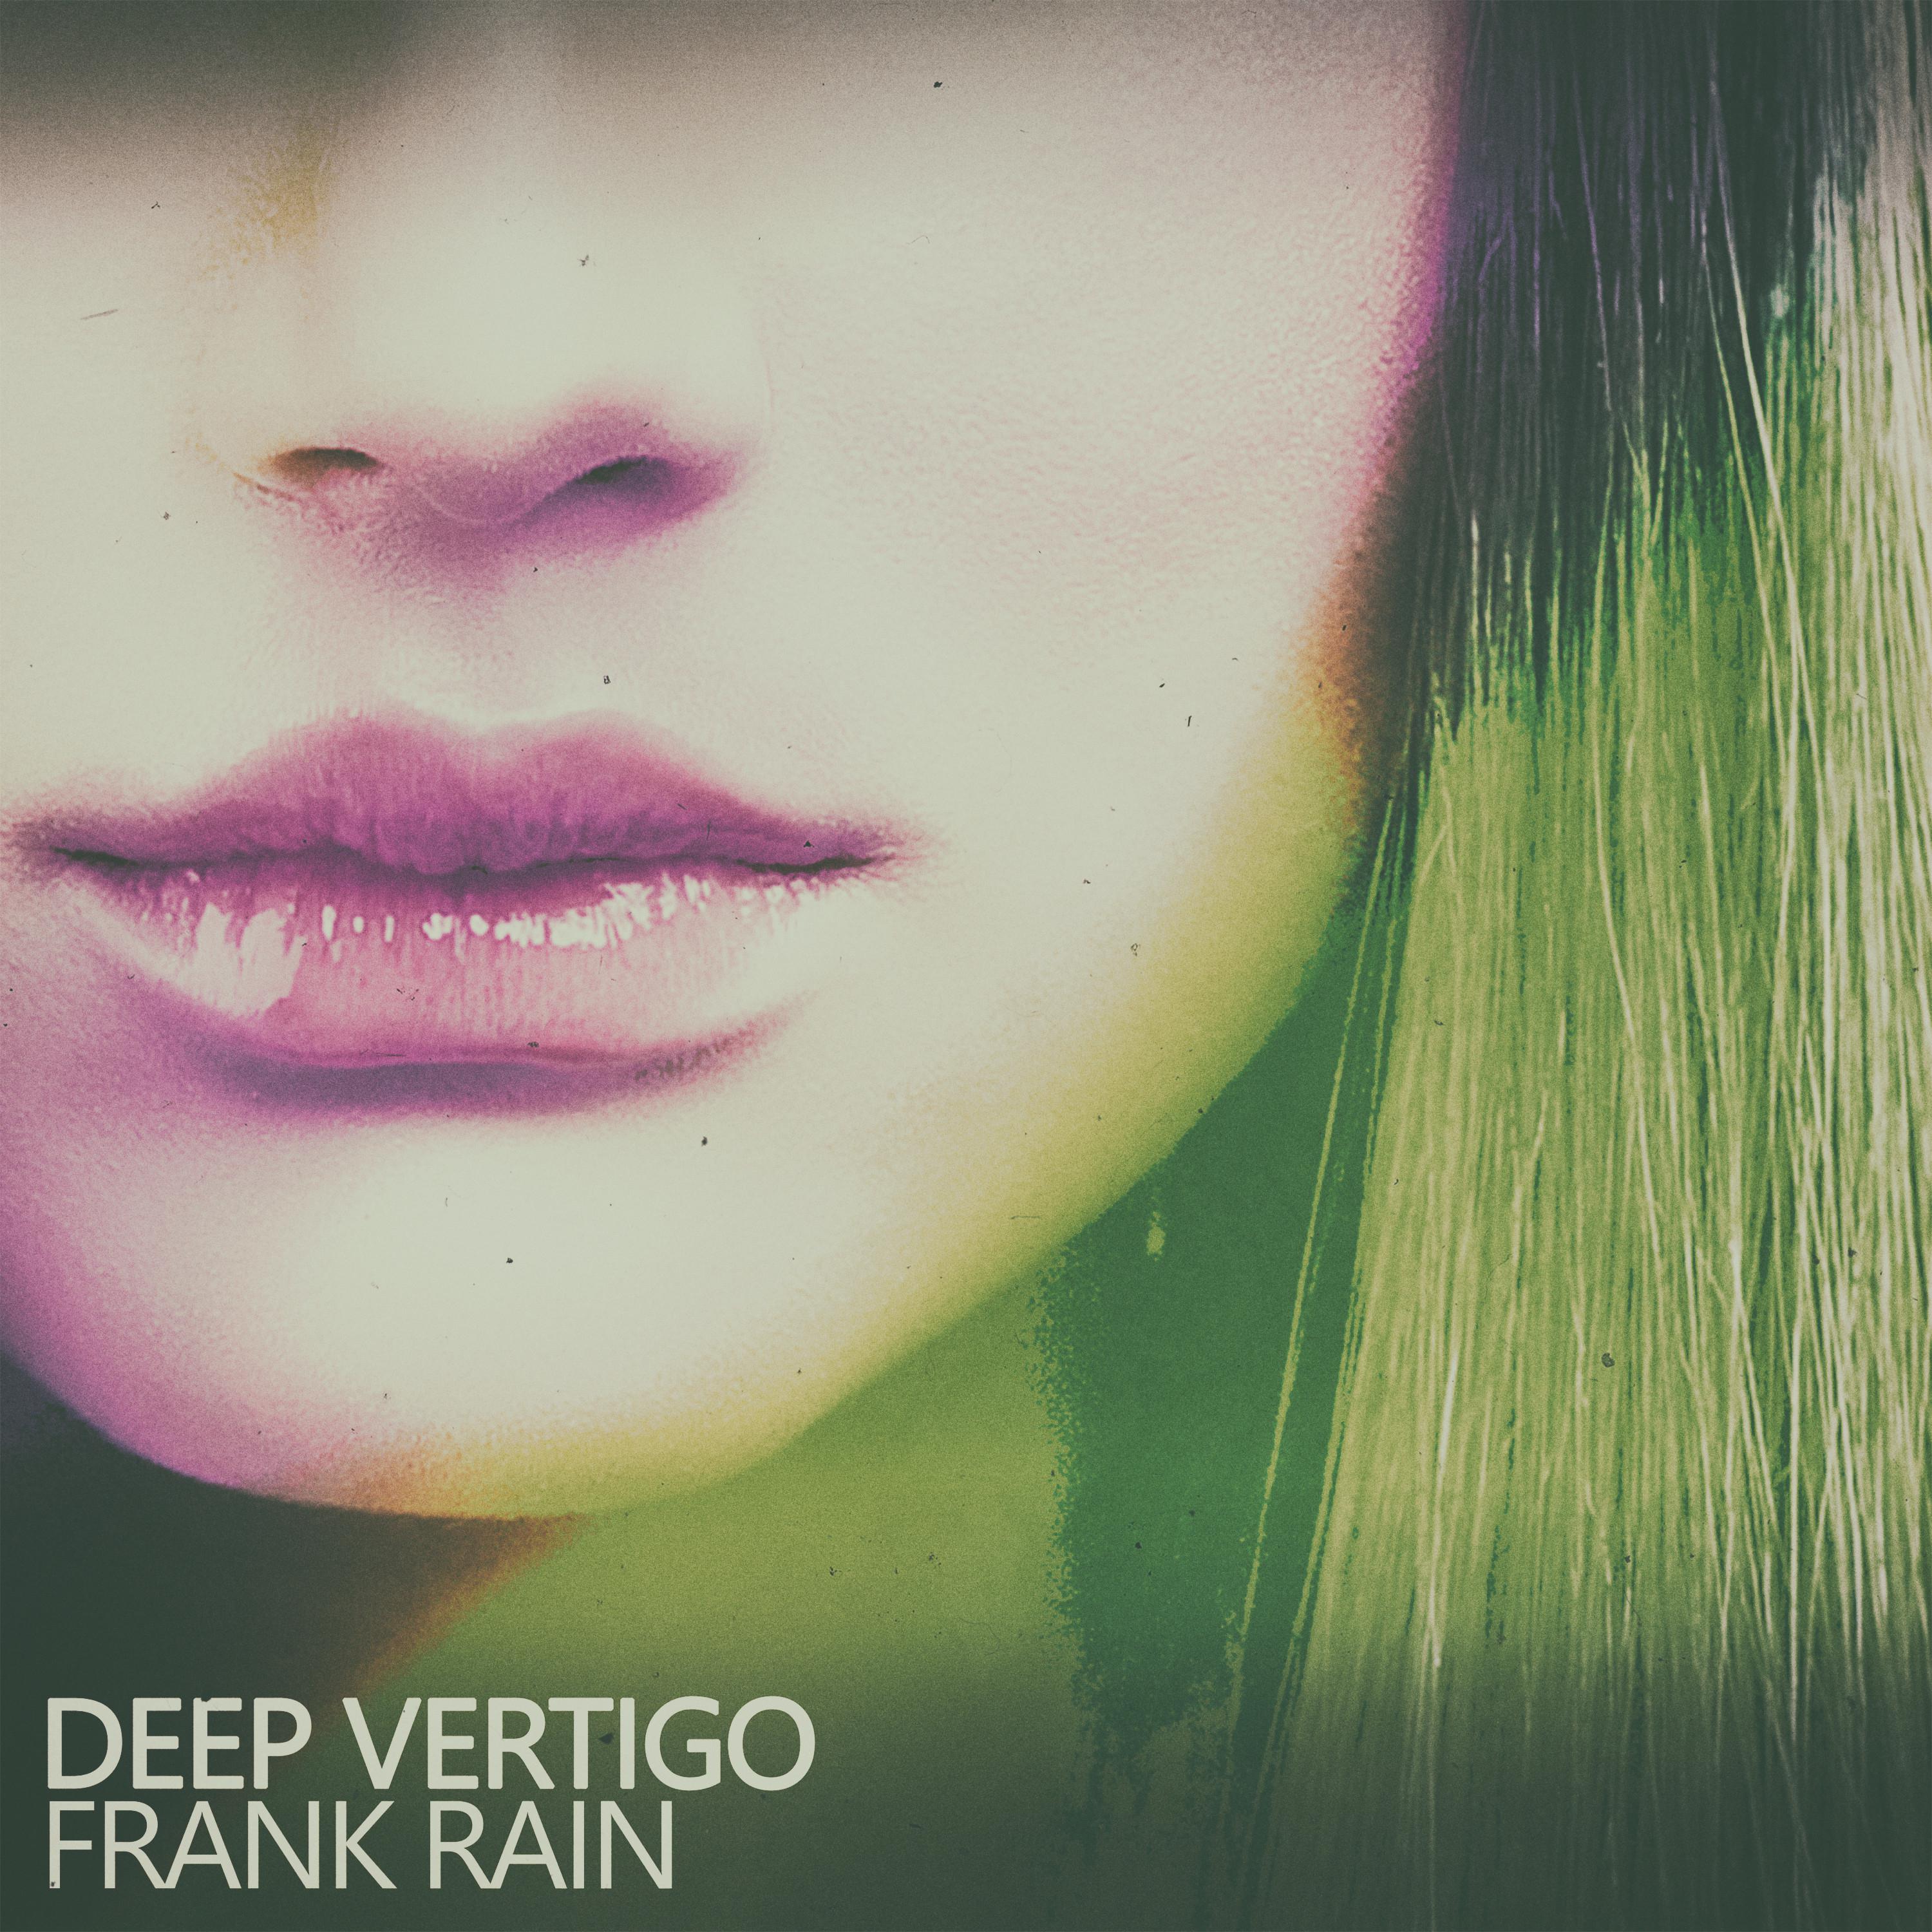 Frank Rain - Deep Vertigo (Vertigo Real Mix)